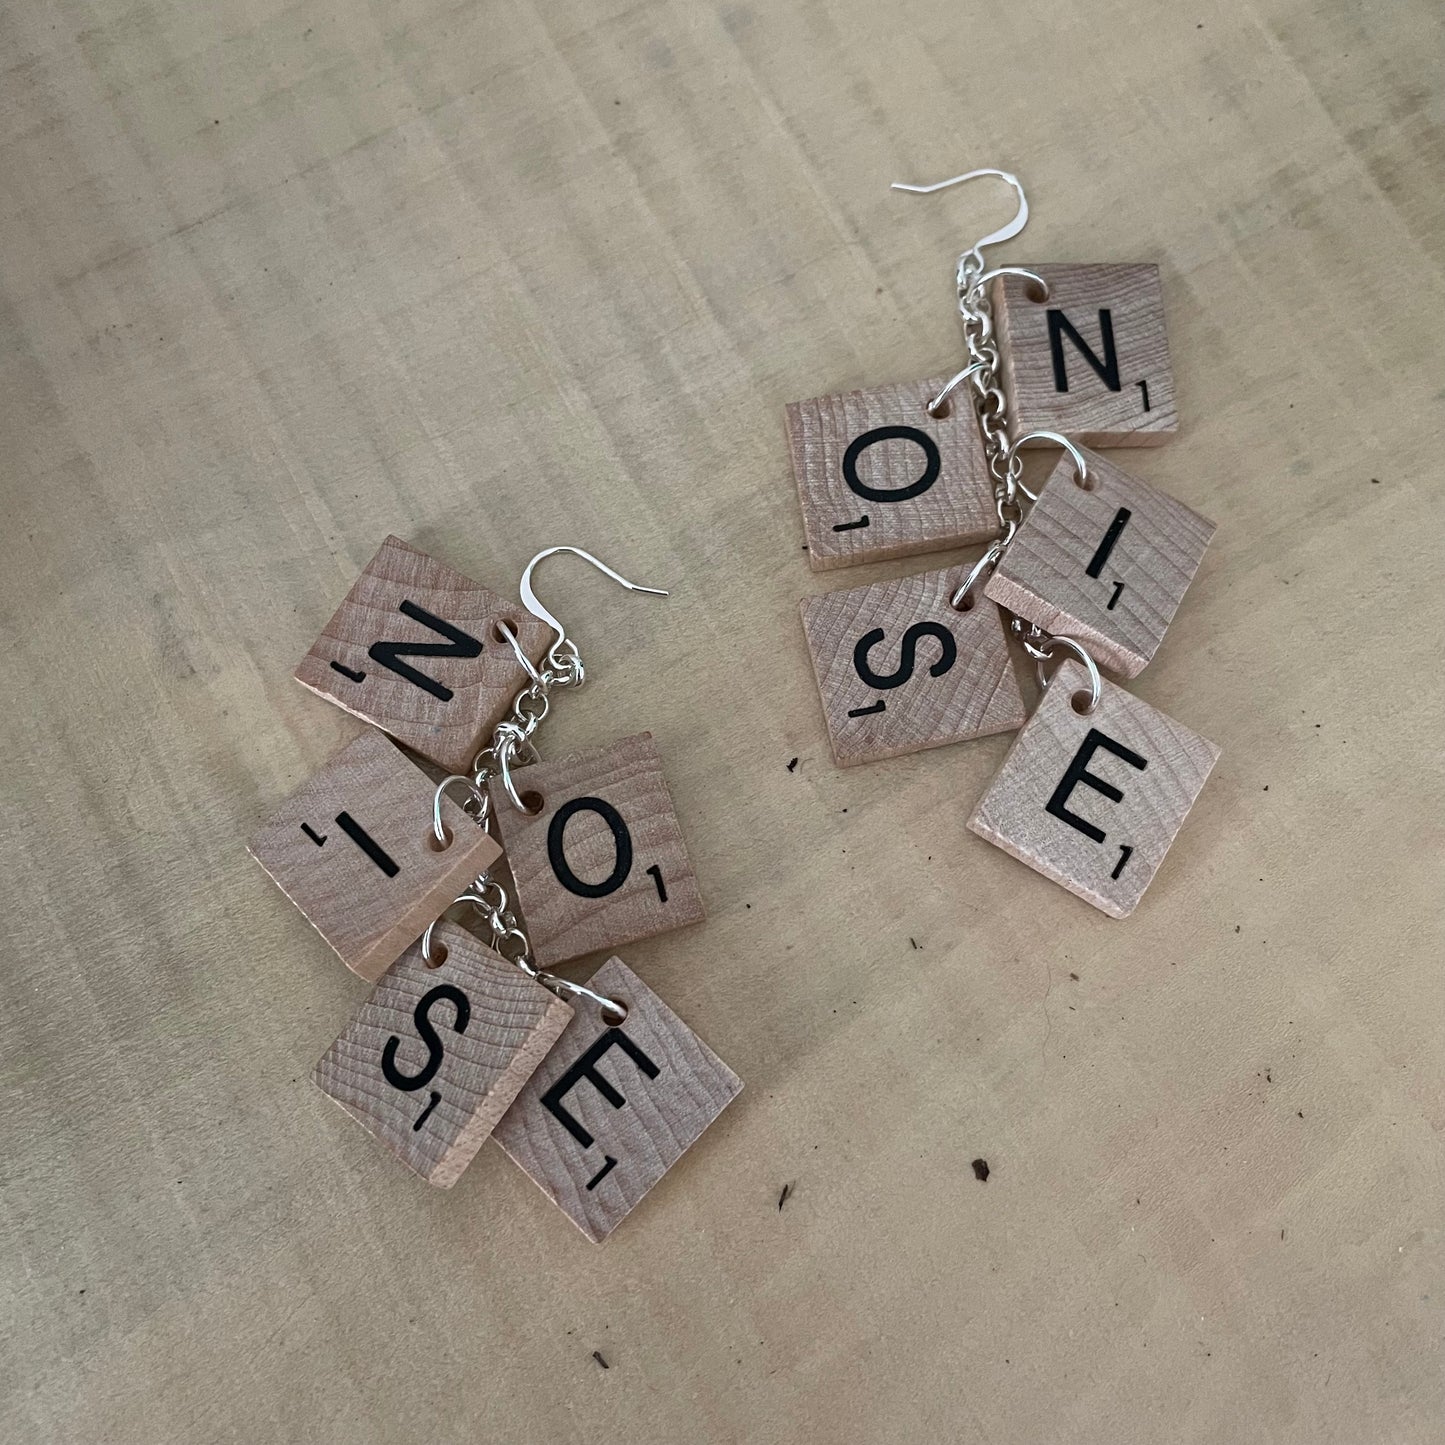 NOISE Statement Dangle Earrings 3.5" Scrabble Tile Tan Wood Repurposed Upcycled Fun Game OOAK